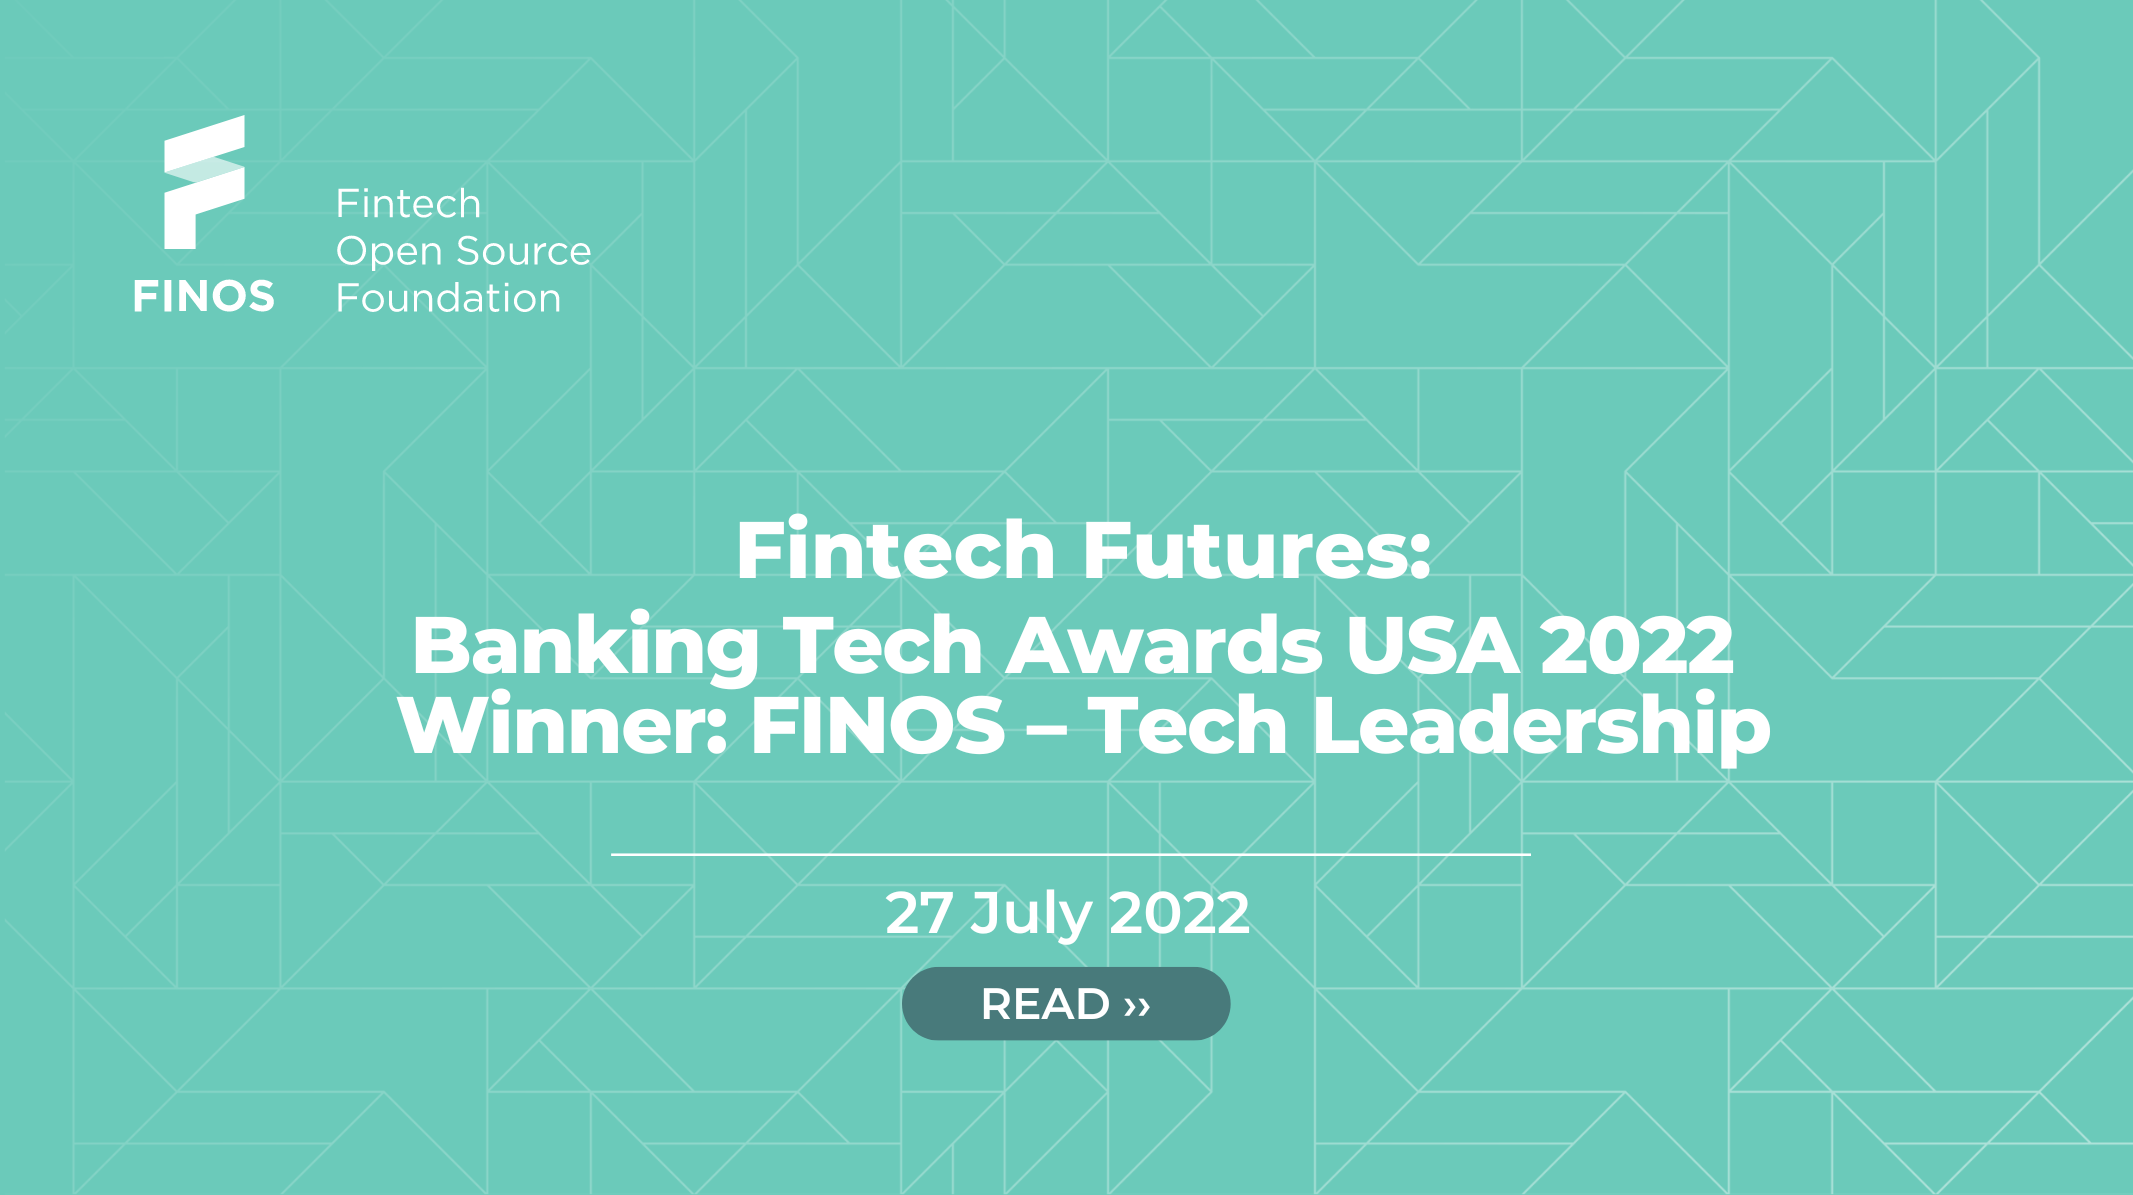 Fintech Futures: Banking Tech Awards USA 2022 Winner: FINOS - Tech Leadership